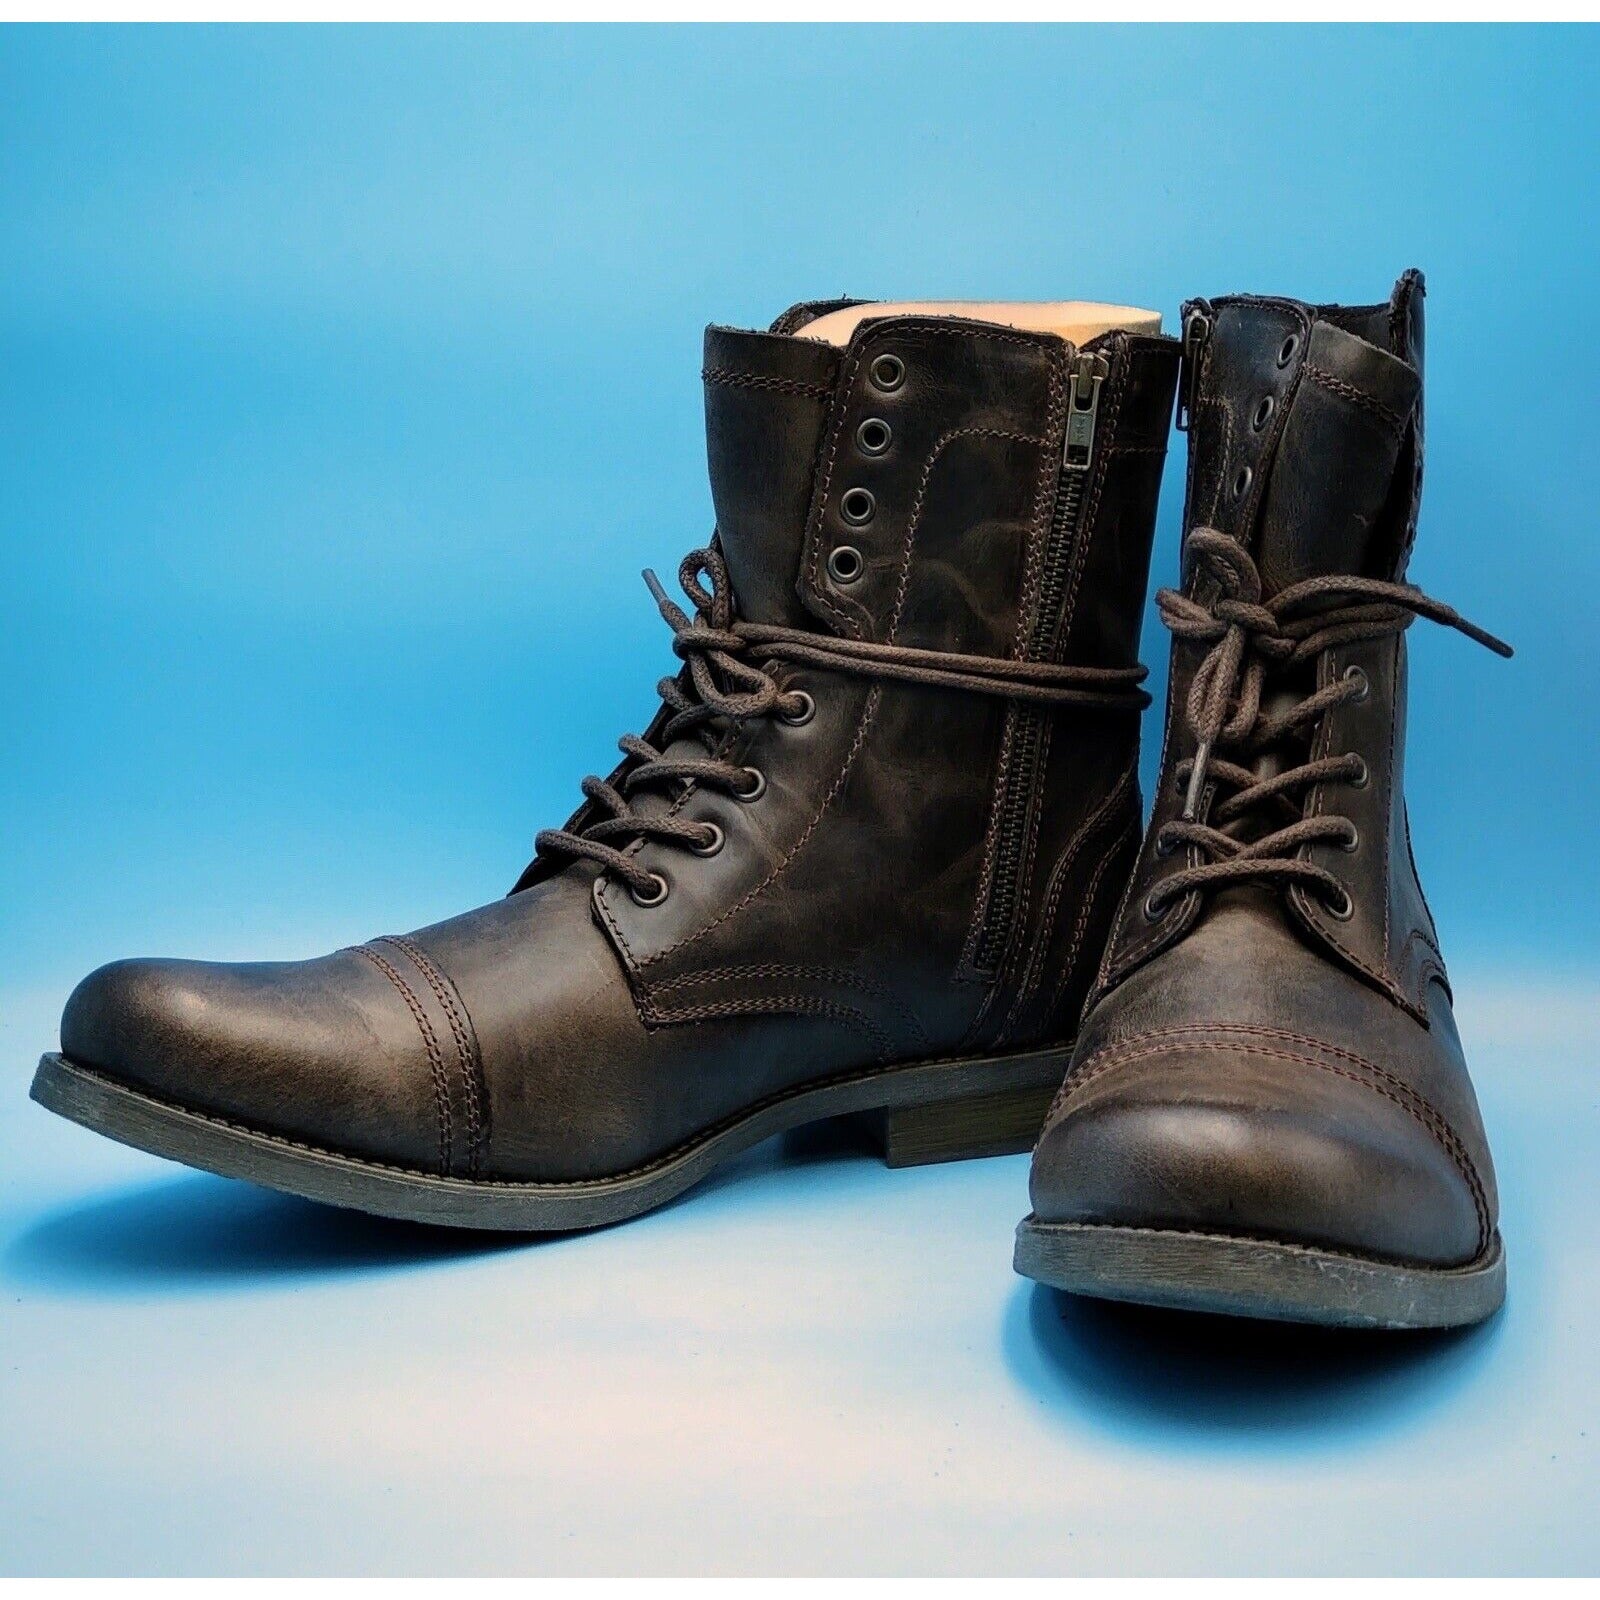 Steve Madden Men's TROOPAH-C Combat Boot, Black Leather, 8.5 M US